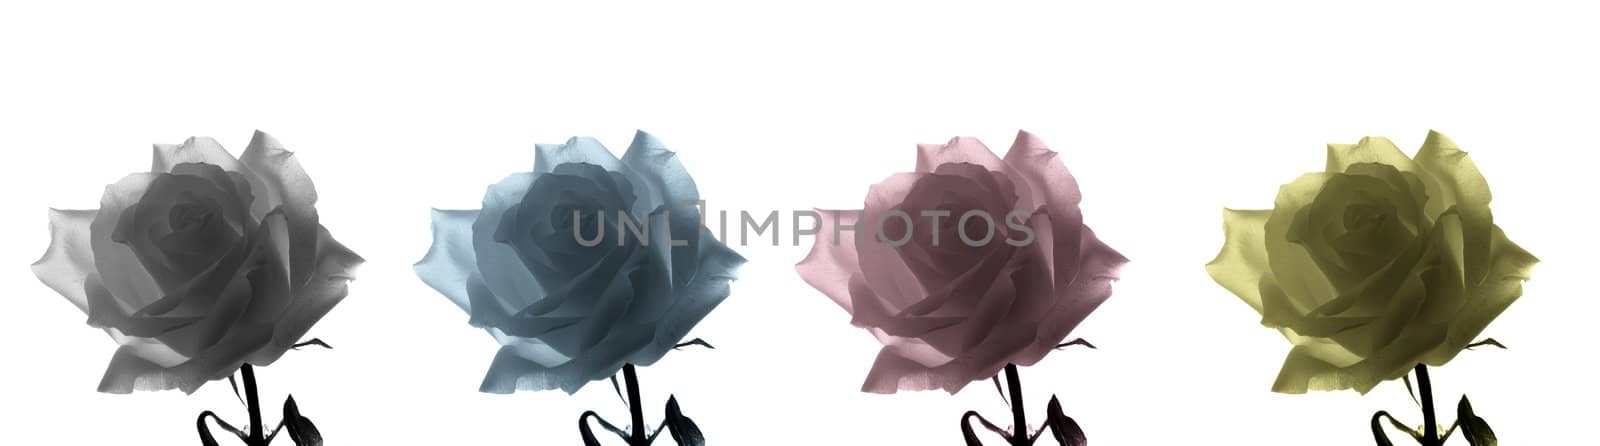 Roses by iribo